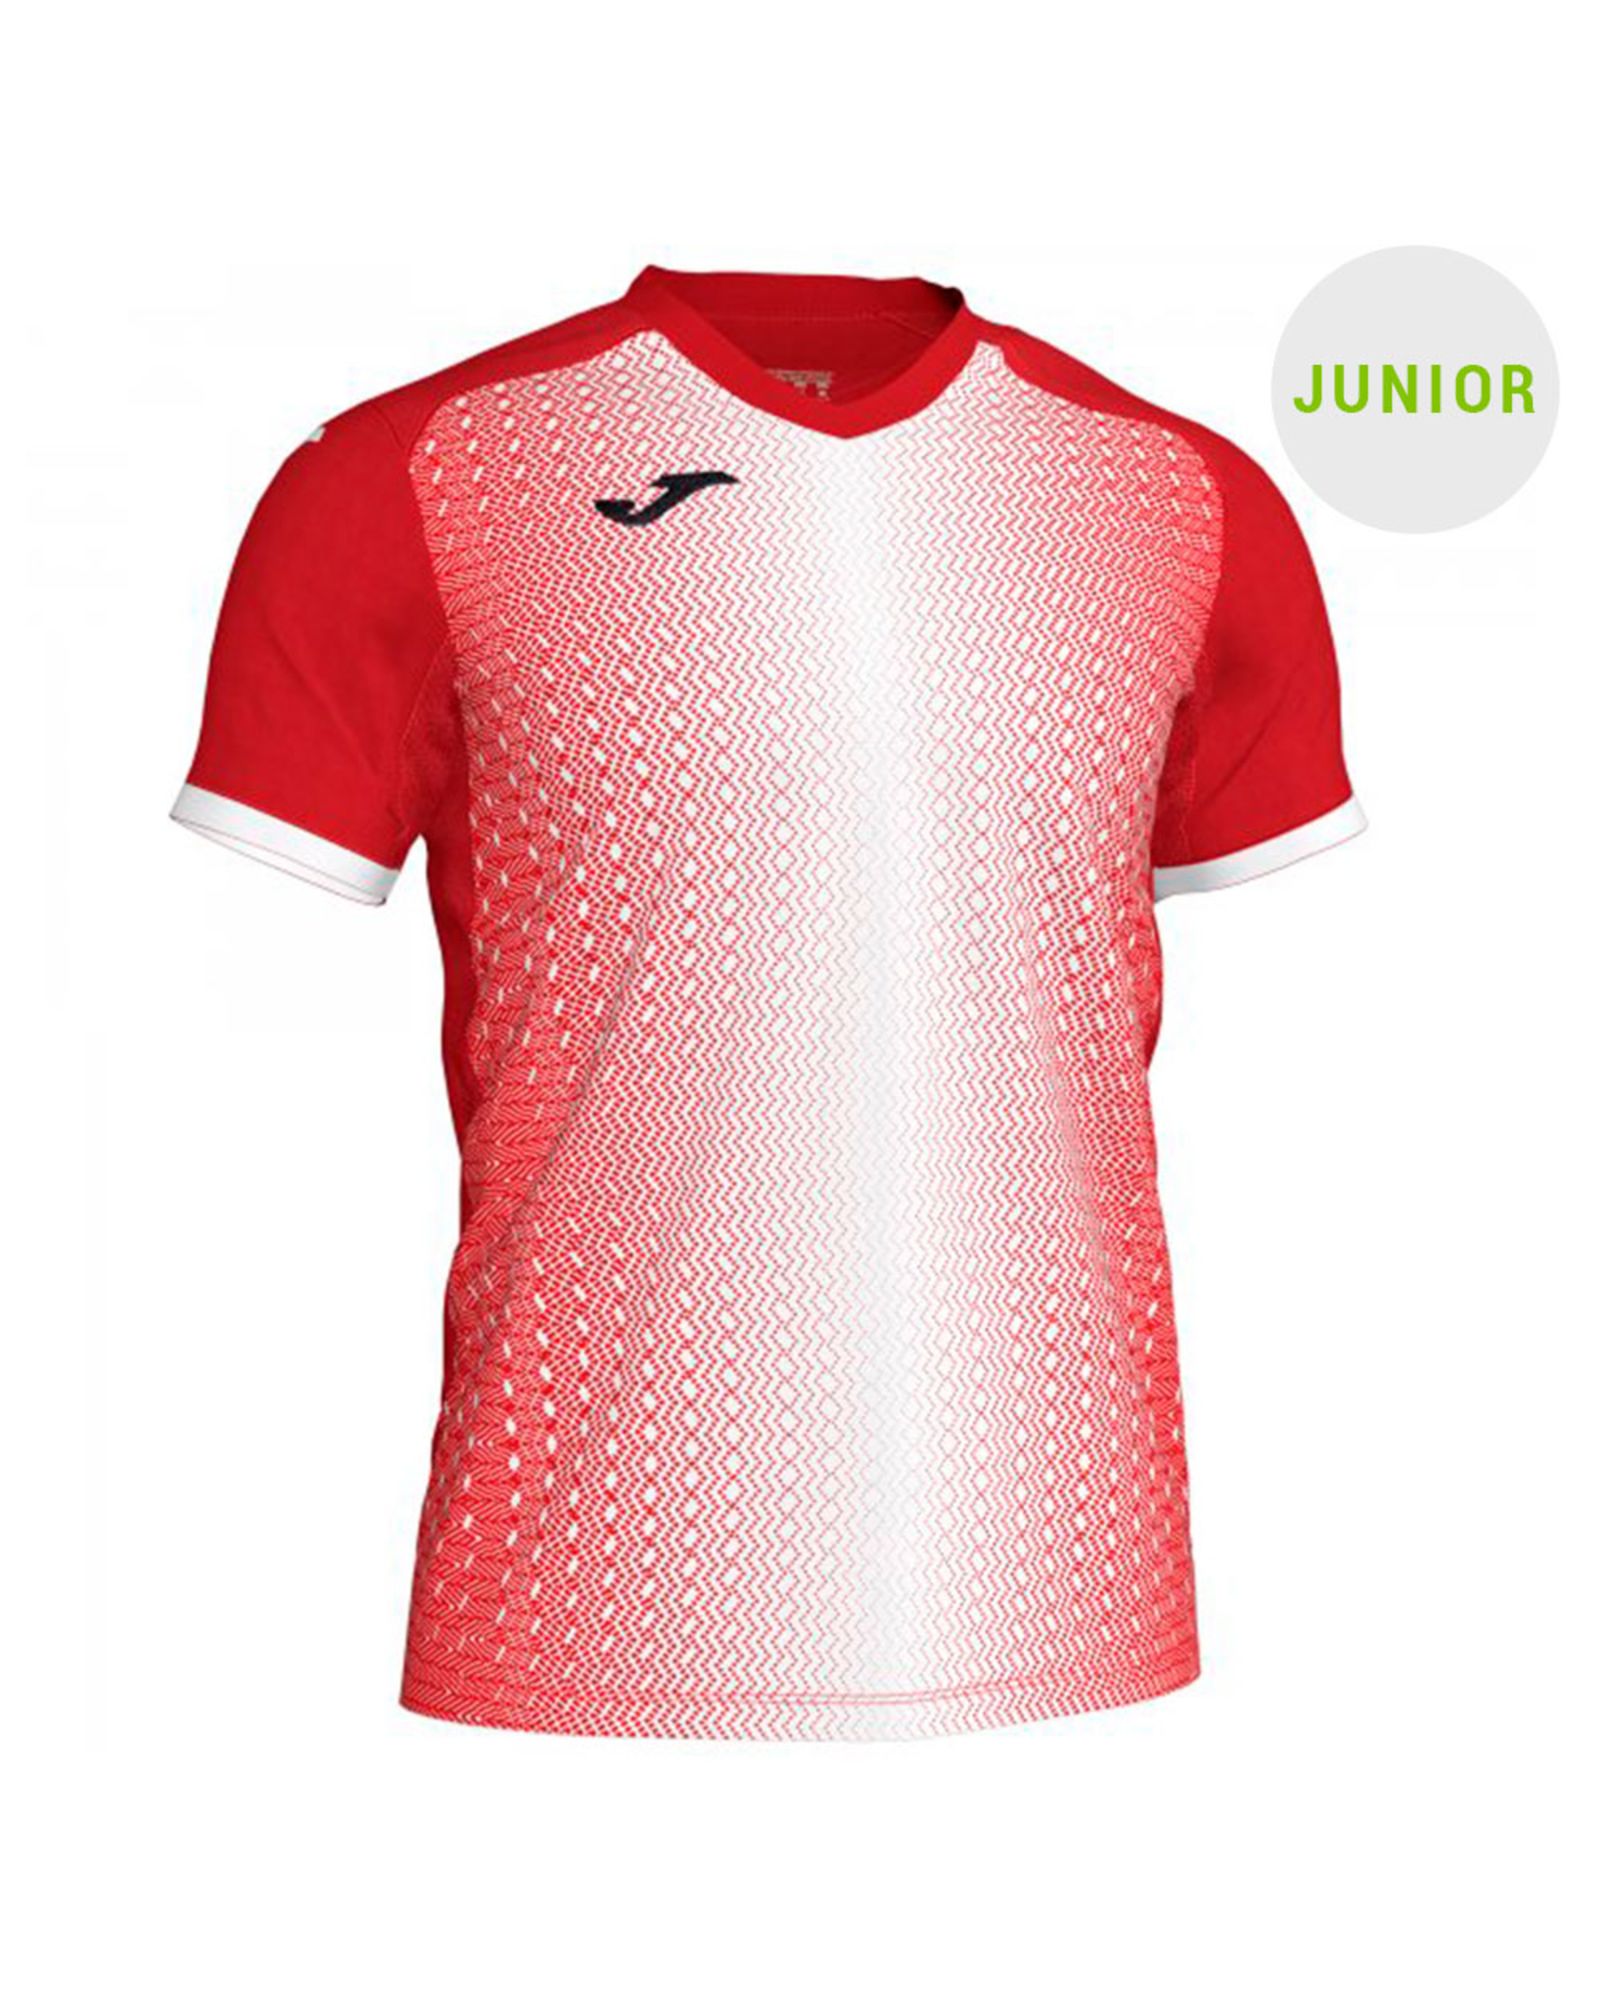 Camiseta Supernova Junior Rojo - Fútbol Factory